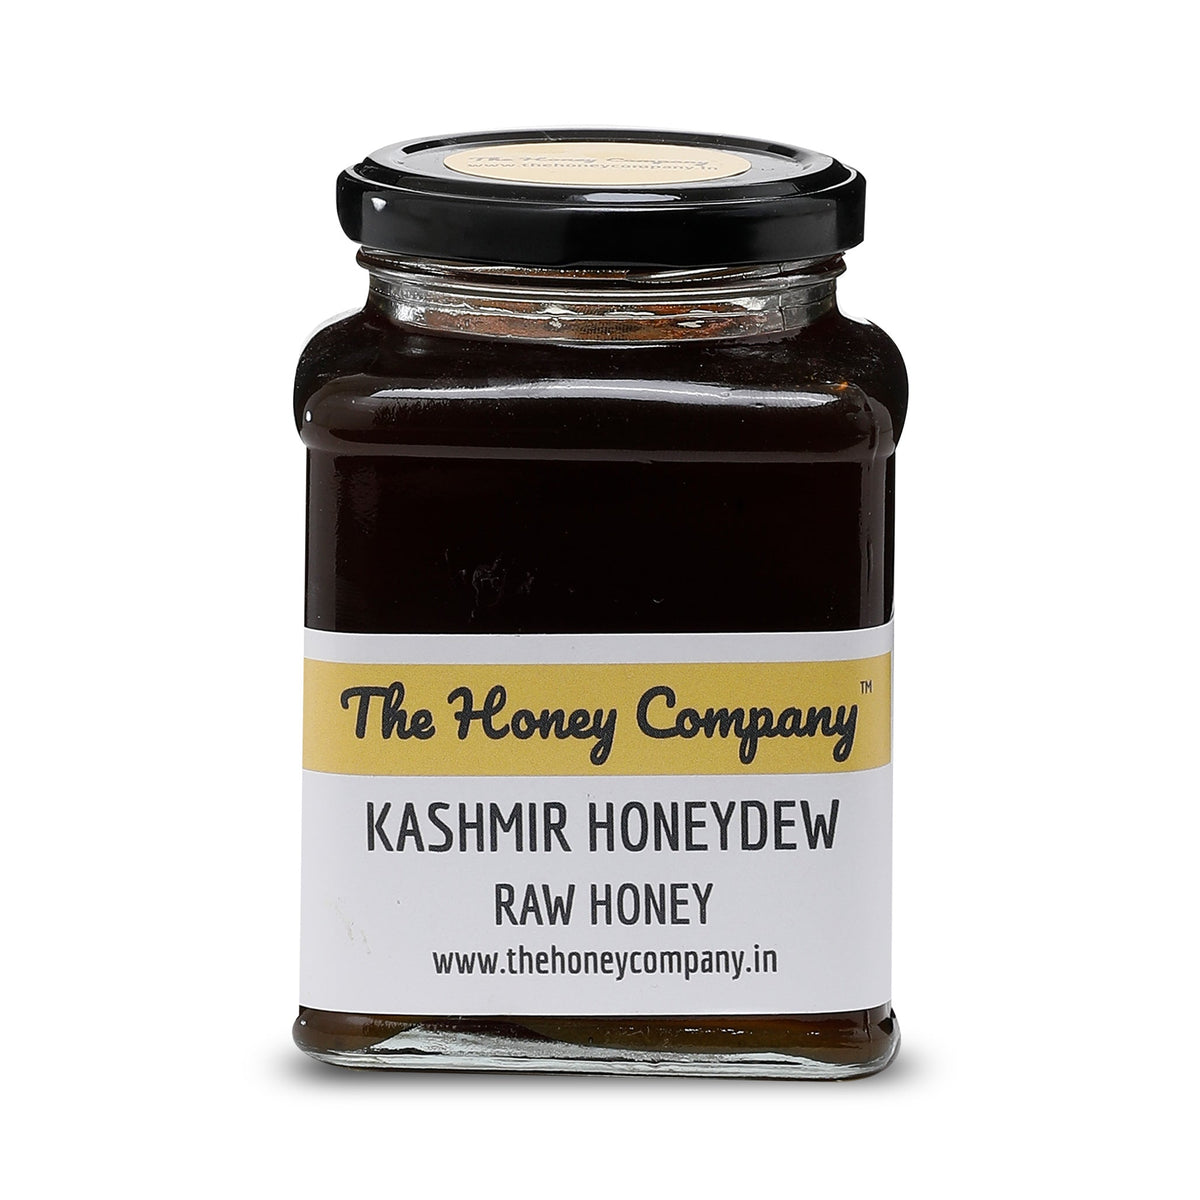 Kashmir Honeydew Raw Honey - 1 Kg